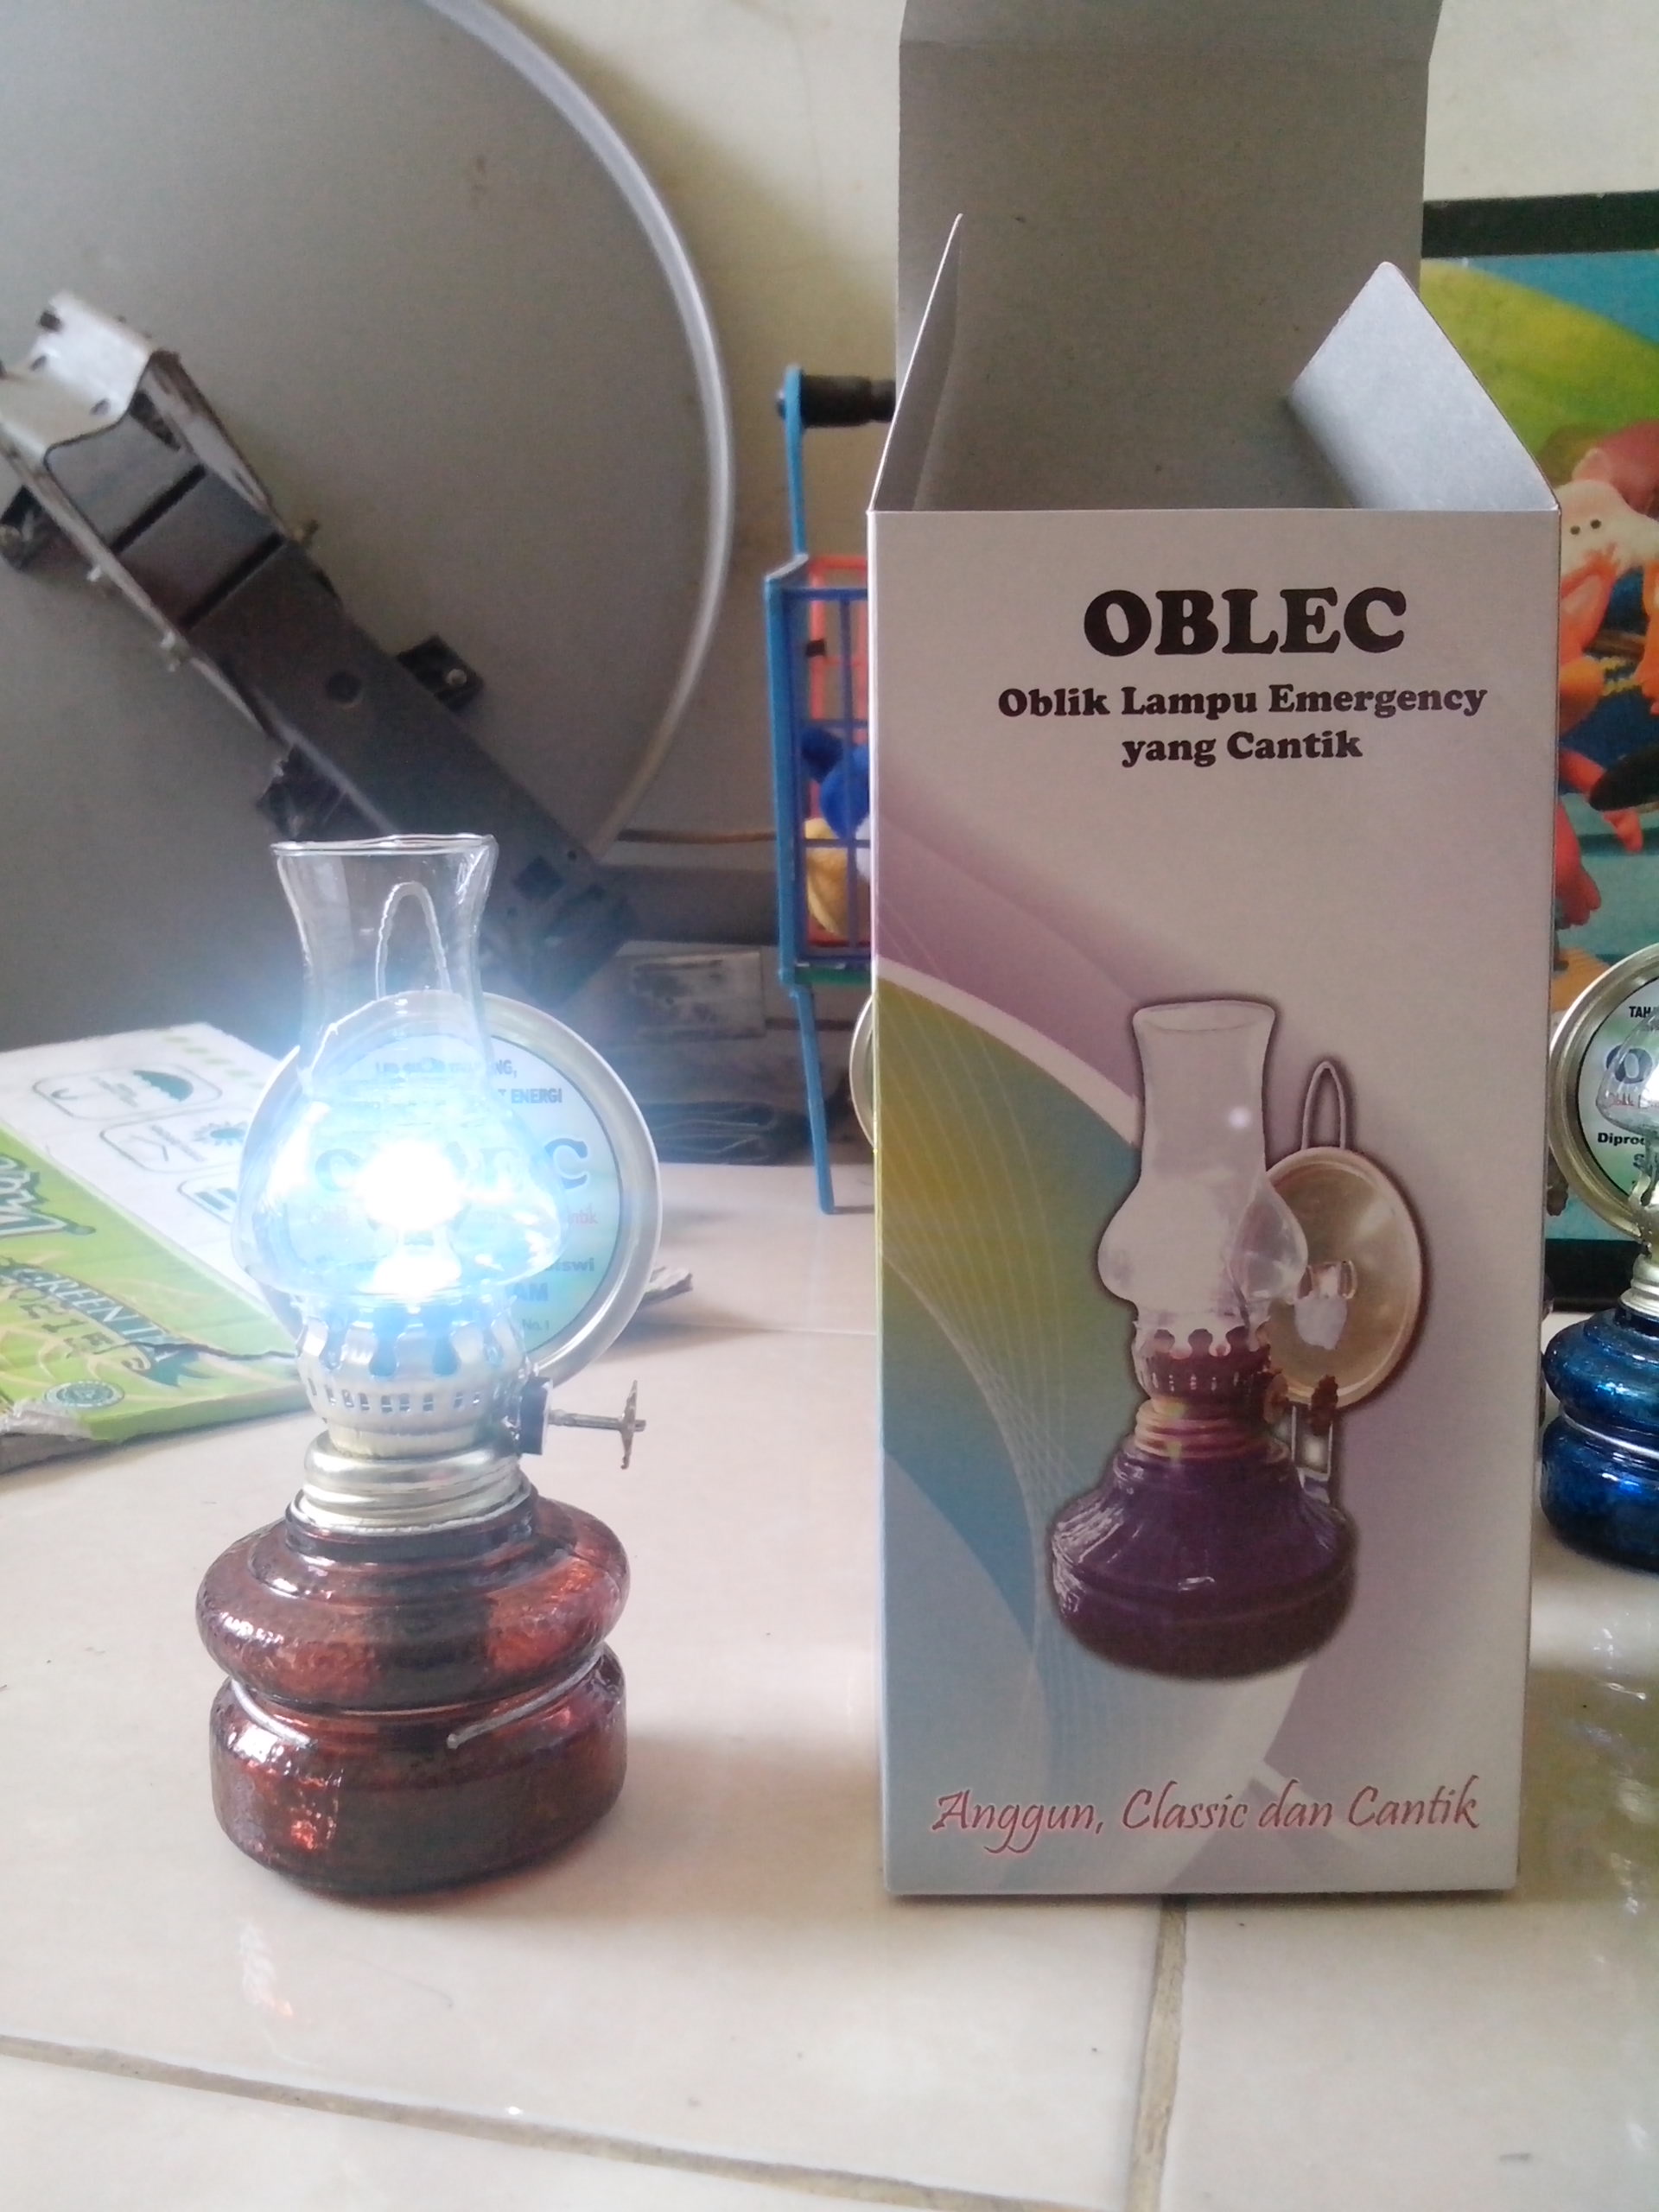 OBLEC Oblik Lampu Emergency Yang Cantik My Blog